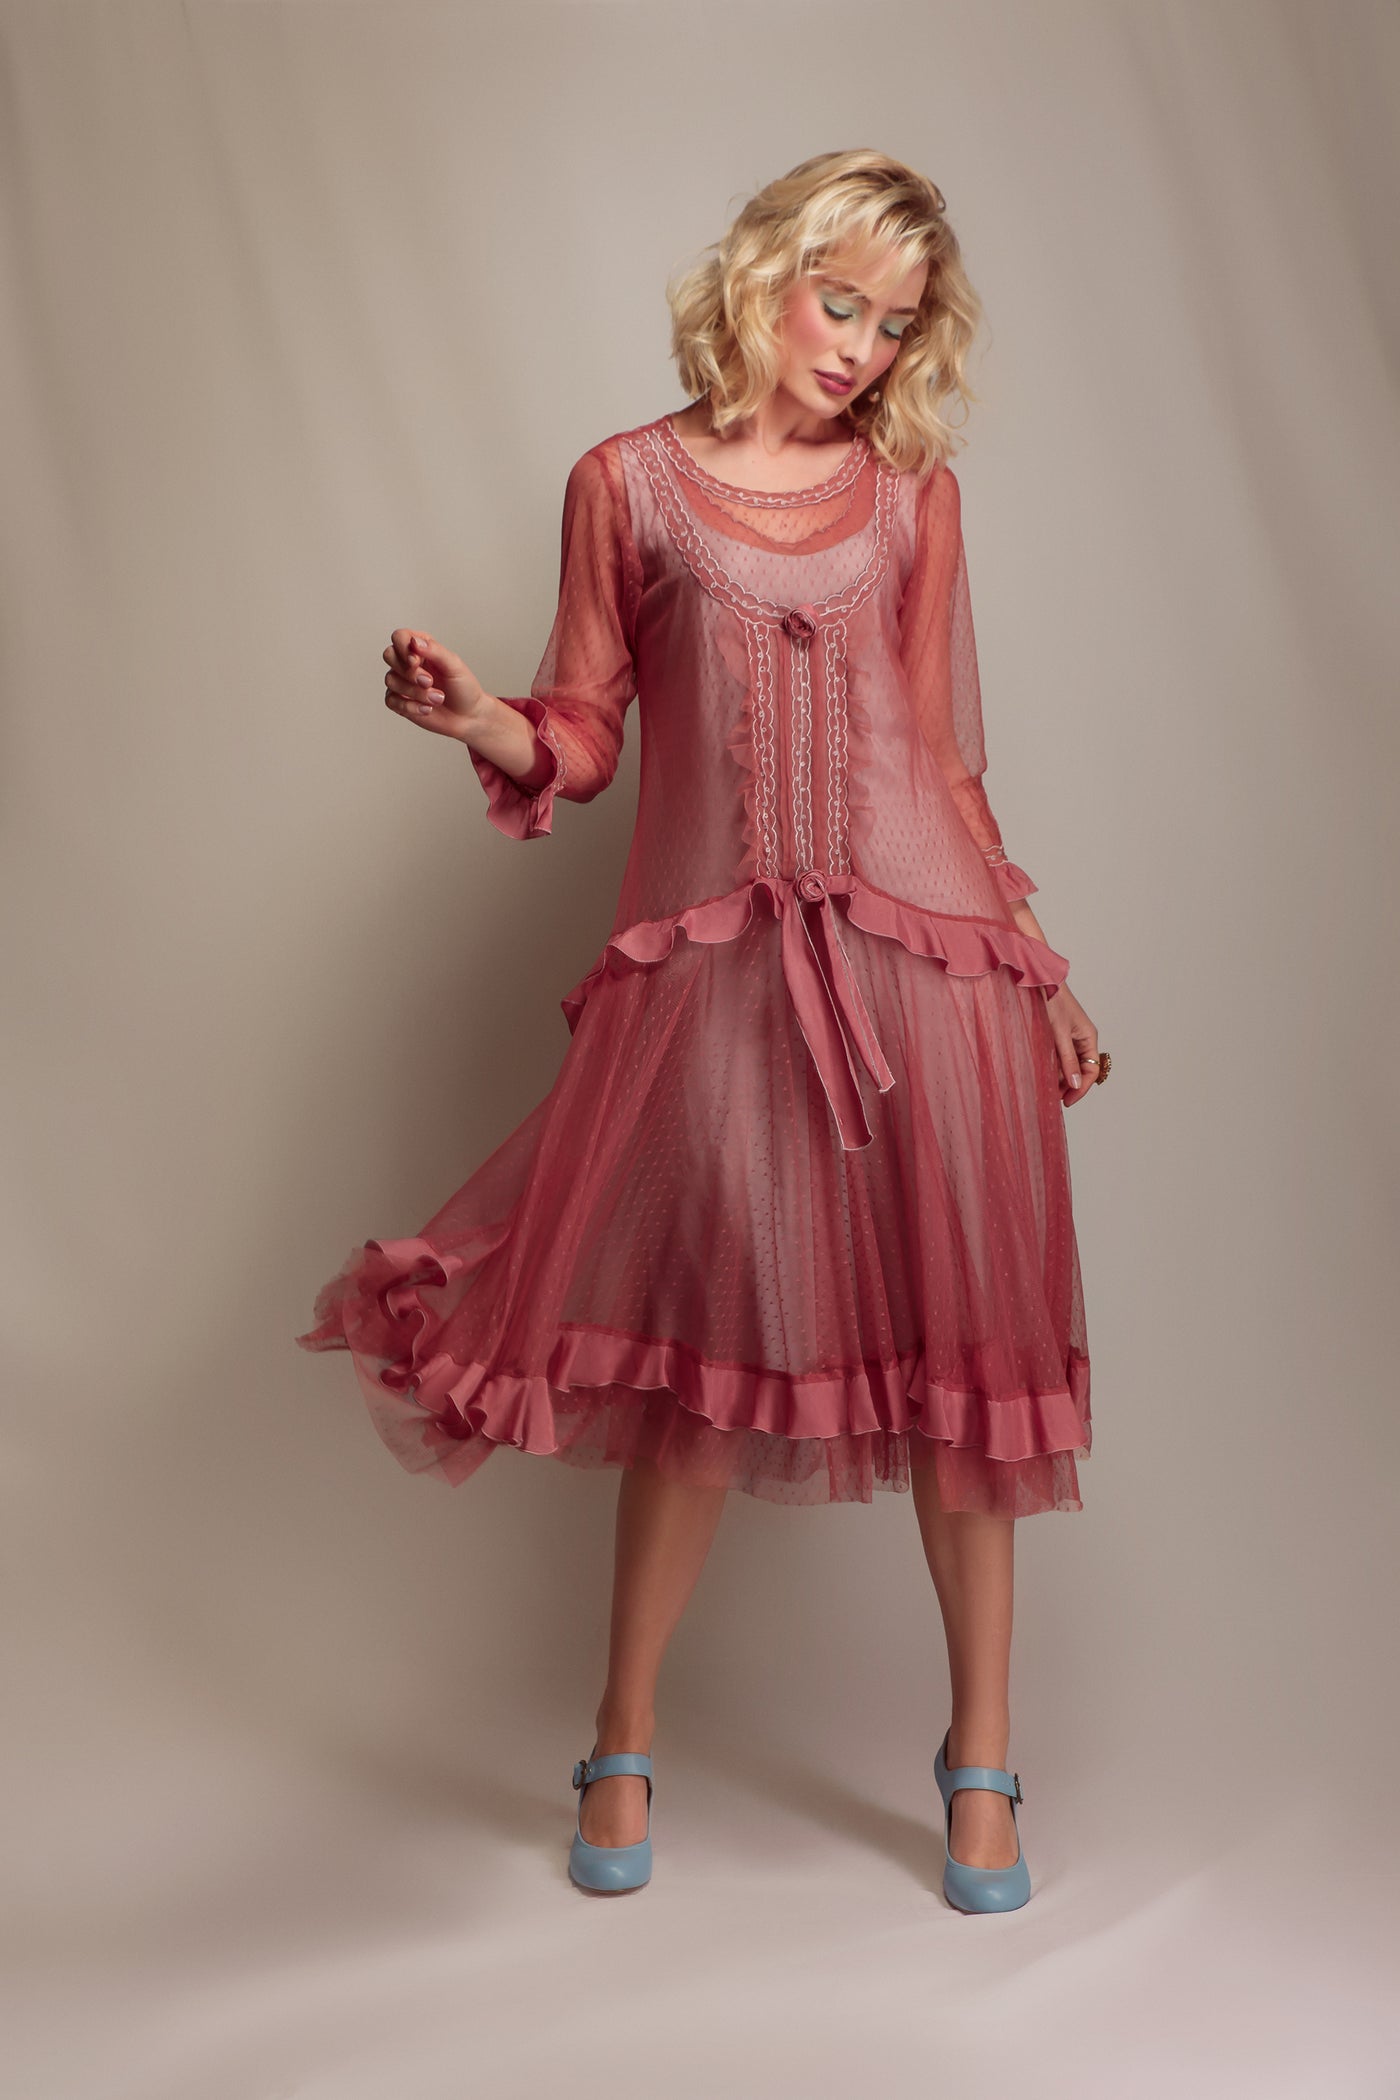 Rosalie Southwest Charm Dress in Mauve by Nataya